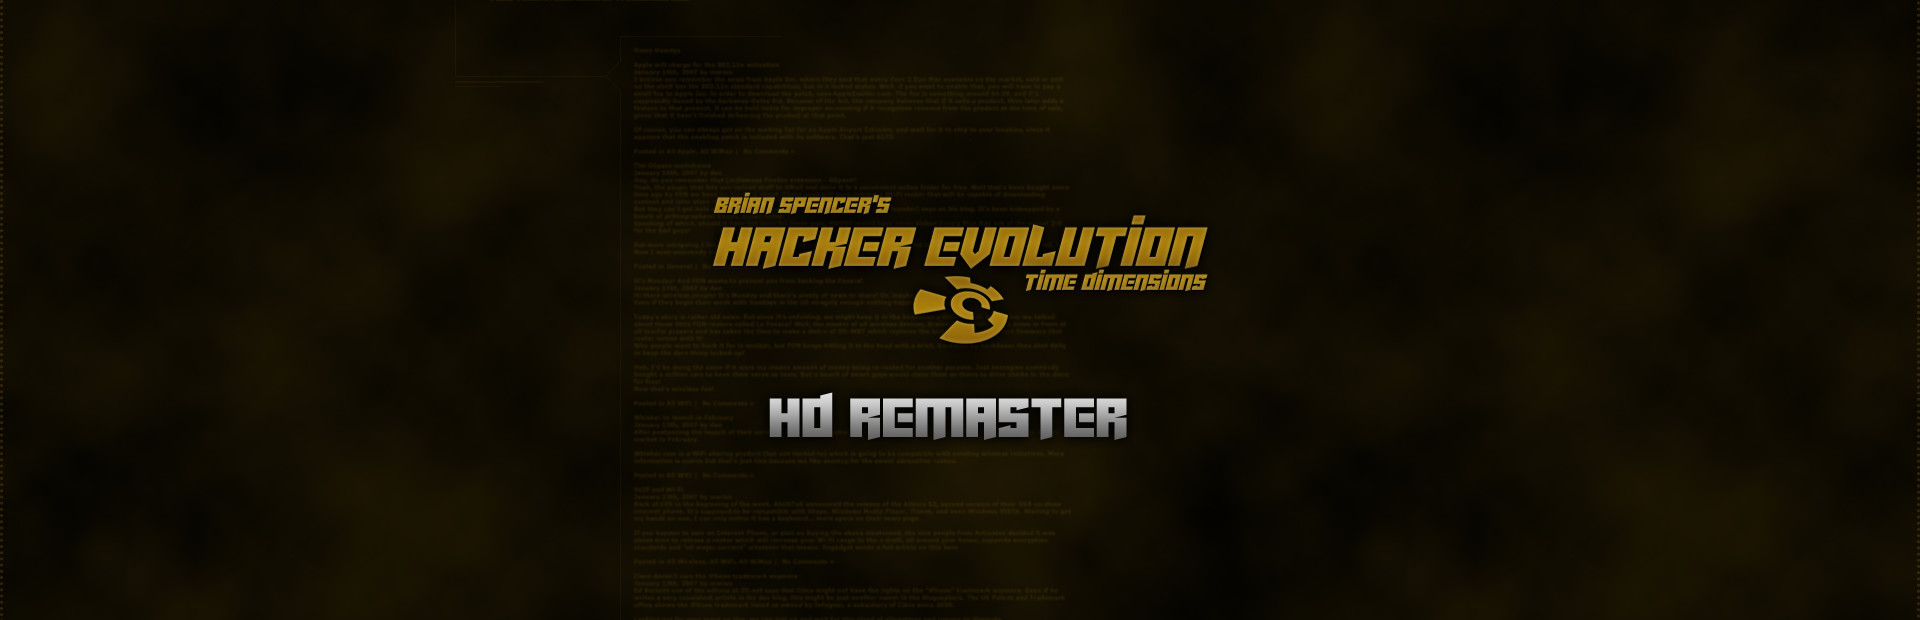 Hacker Evolution - 2019 HD remaster cover image